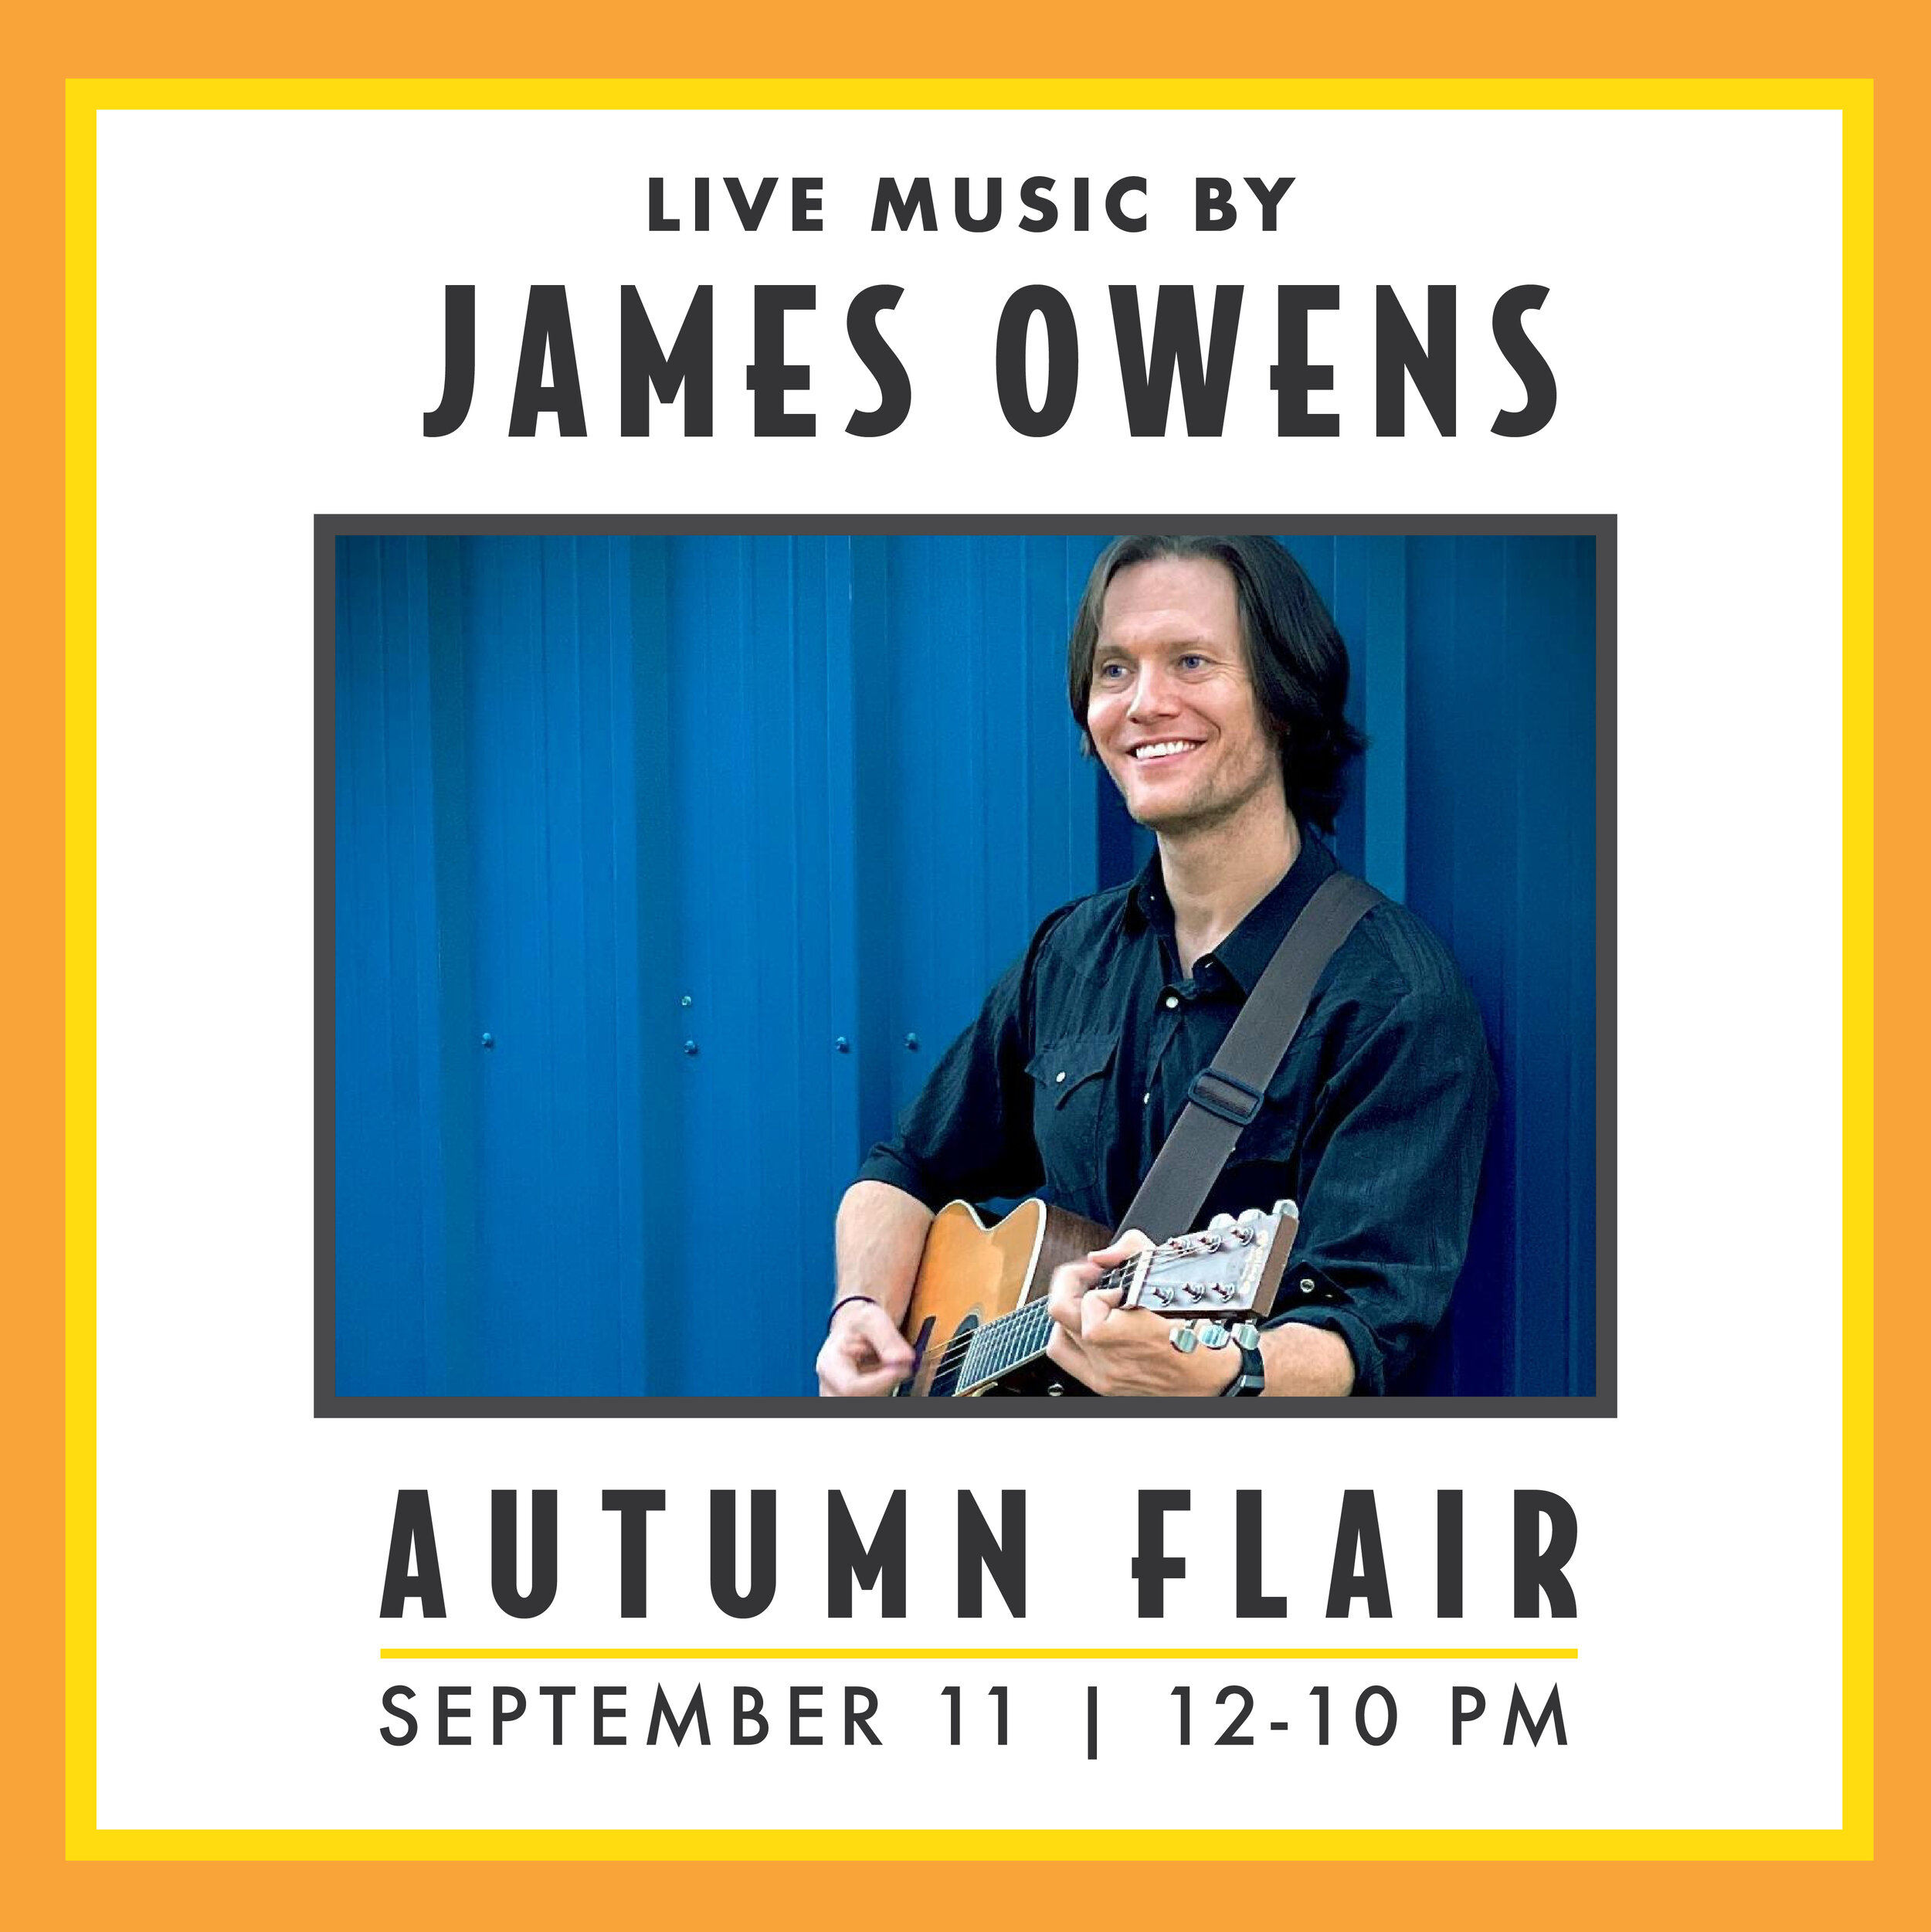 Autumn Flair-Live Music-James Owens.jpg